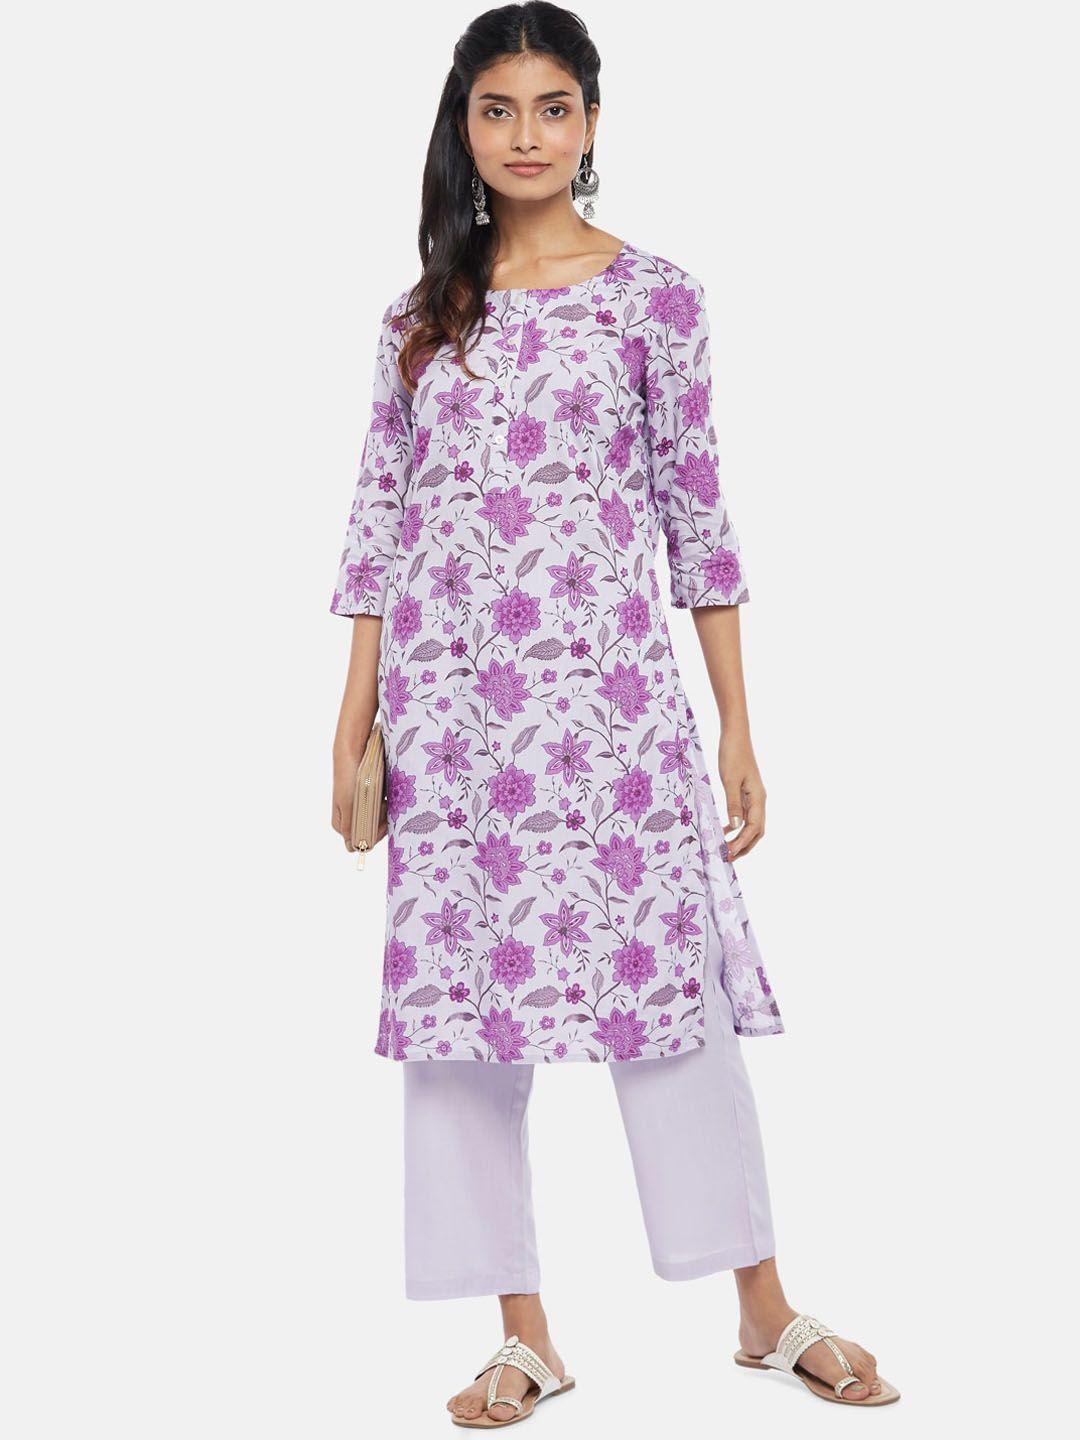 rangmanch-by-pantaloons-women-floral-printed-kurta-with-pyjama-set